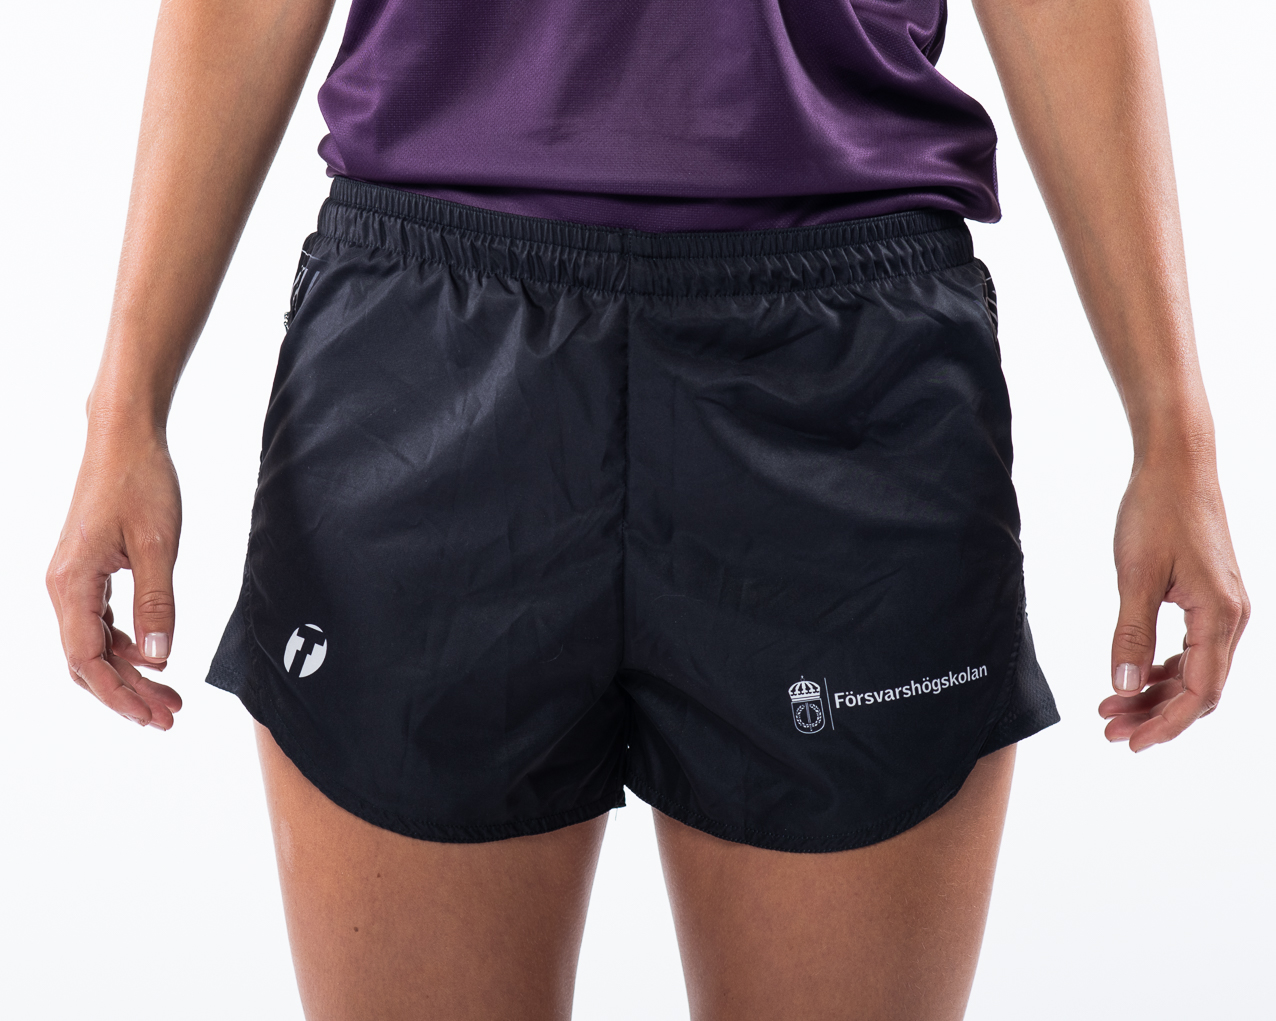 Women's shorts, front